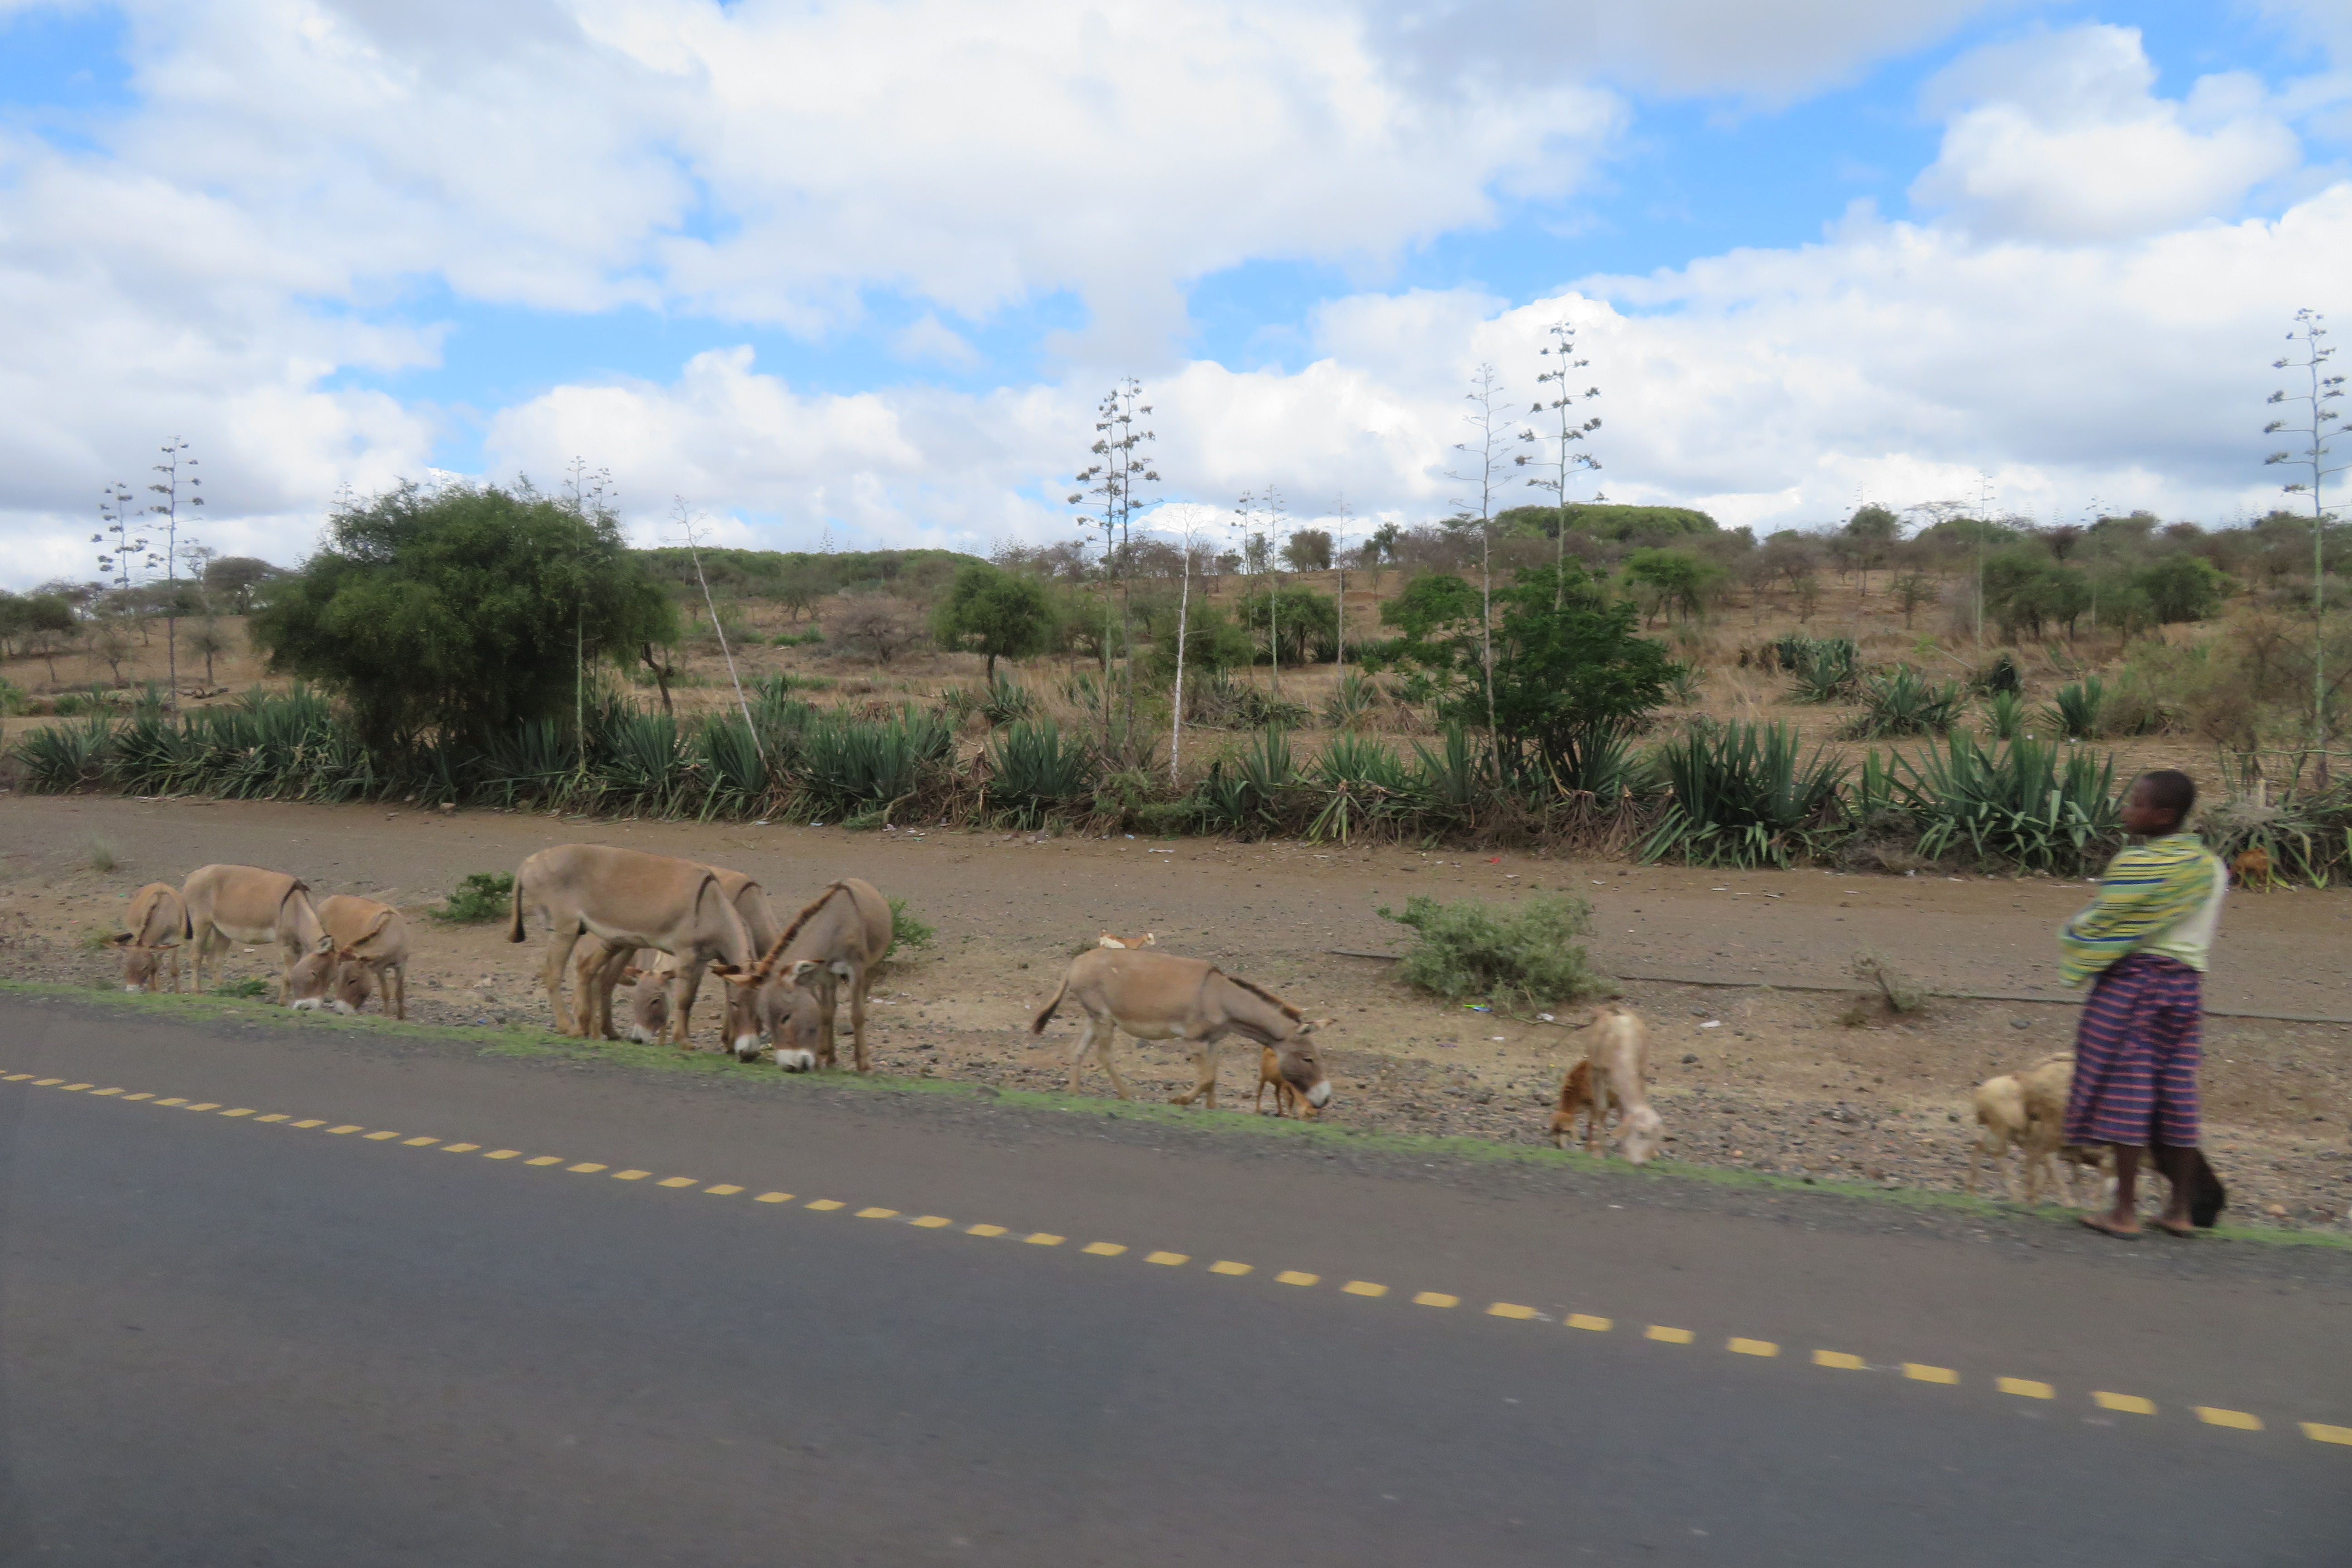 Maasai with donkeys